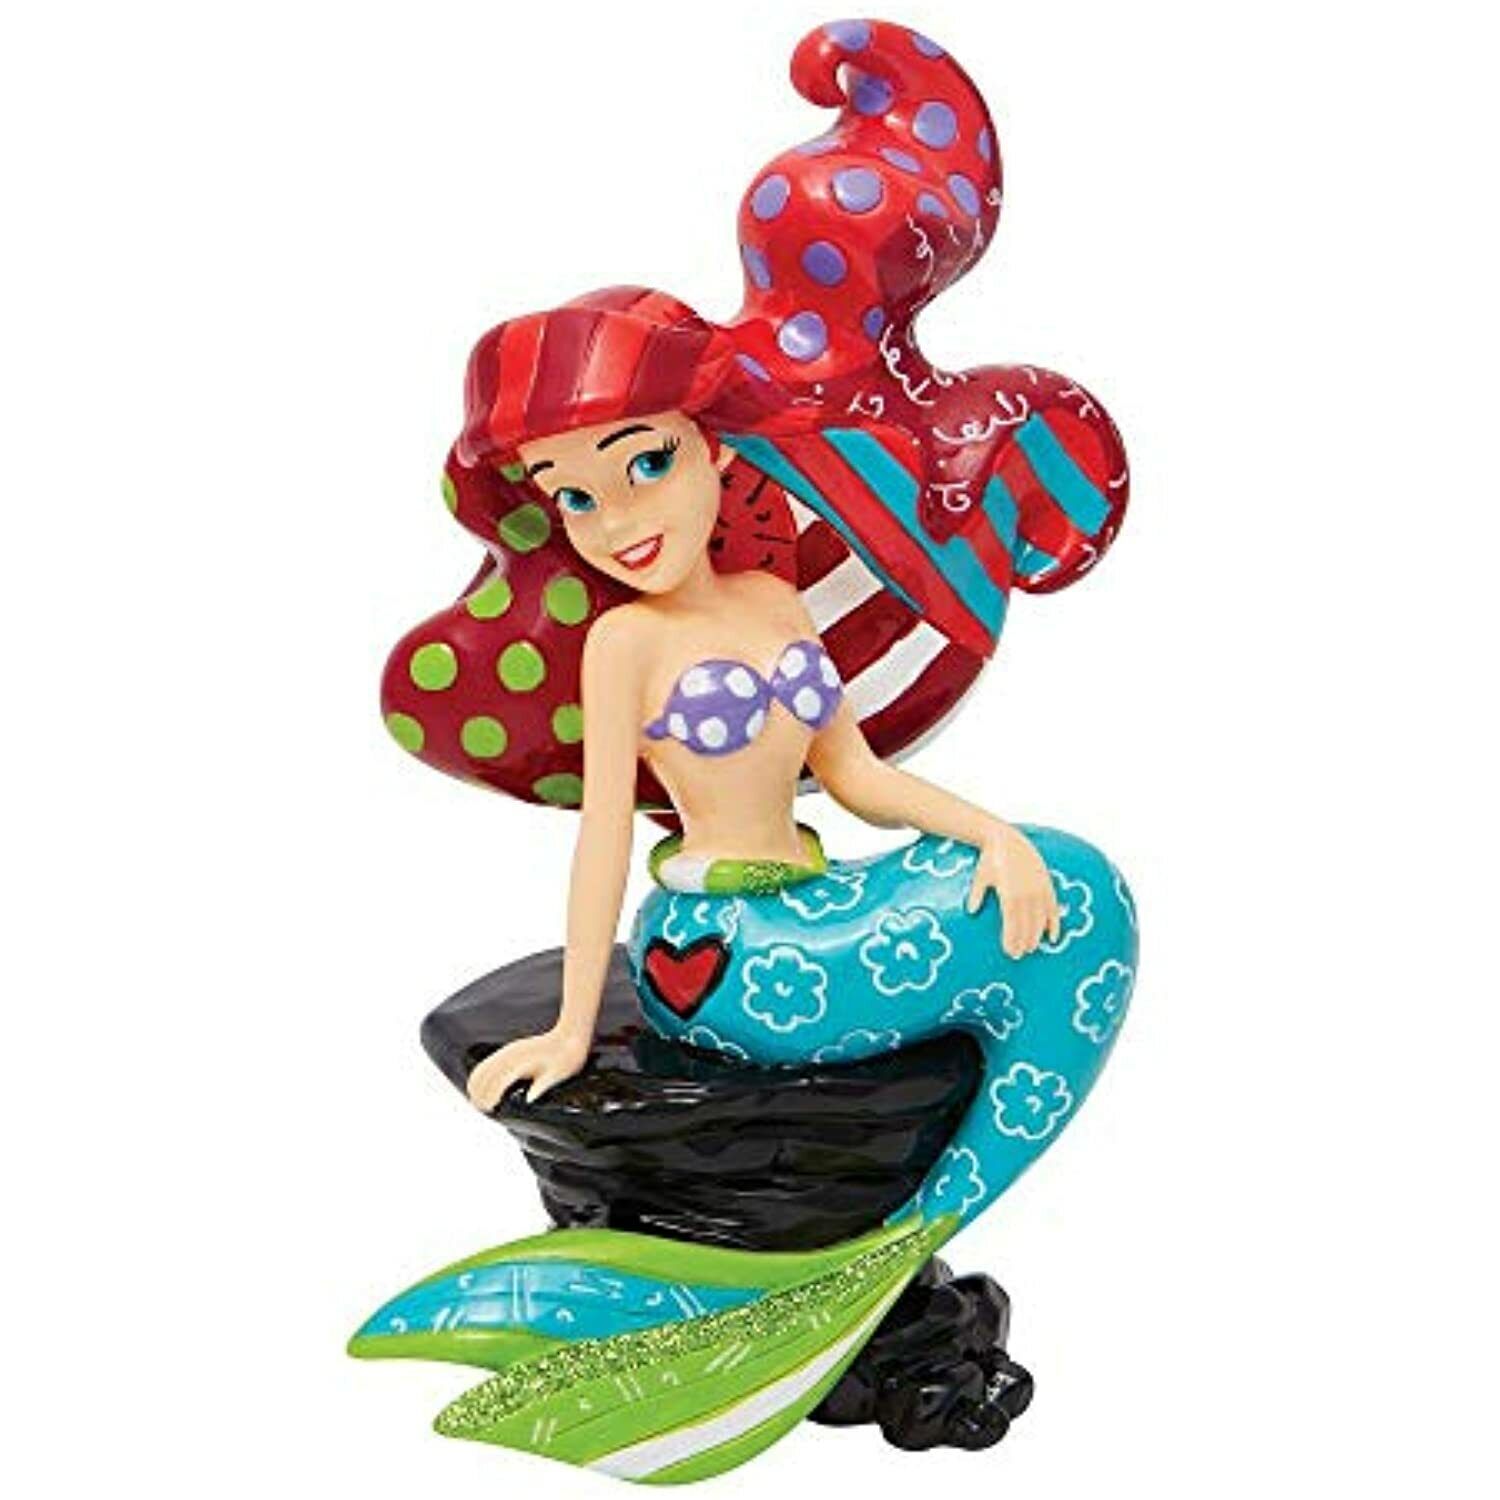 Enesco Disney Britto The Little Mermaid Ariel on Rock Figurine 6009052